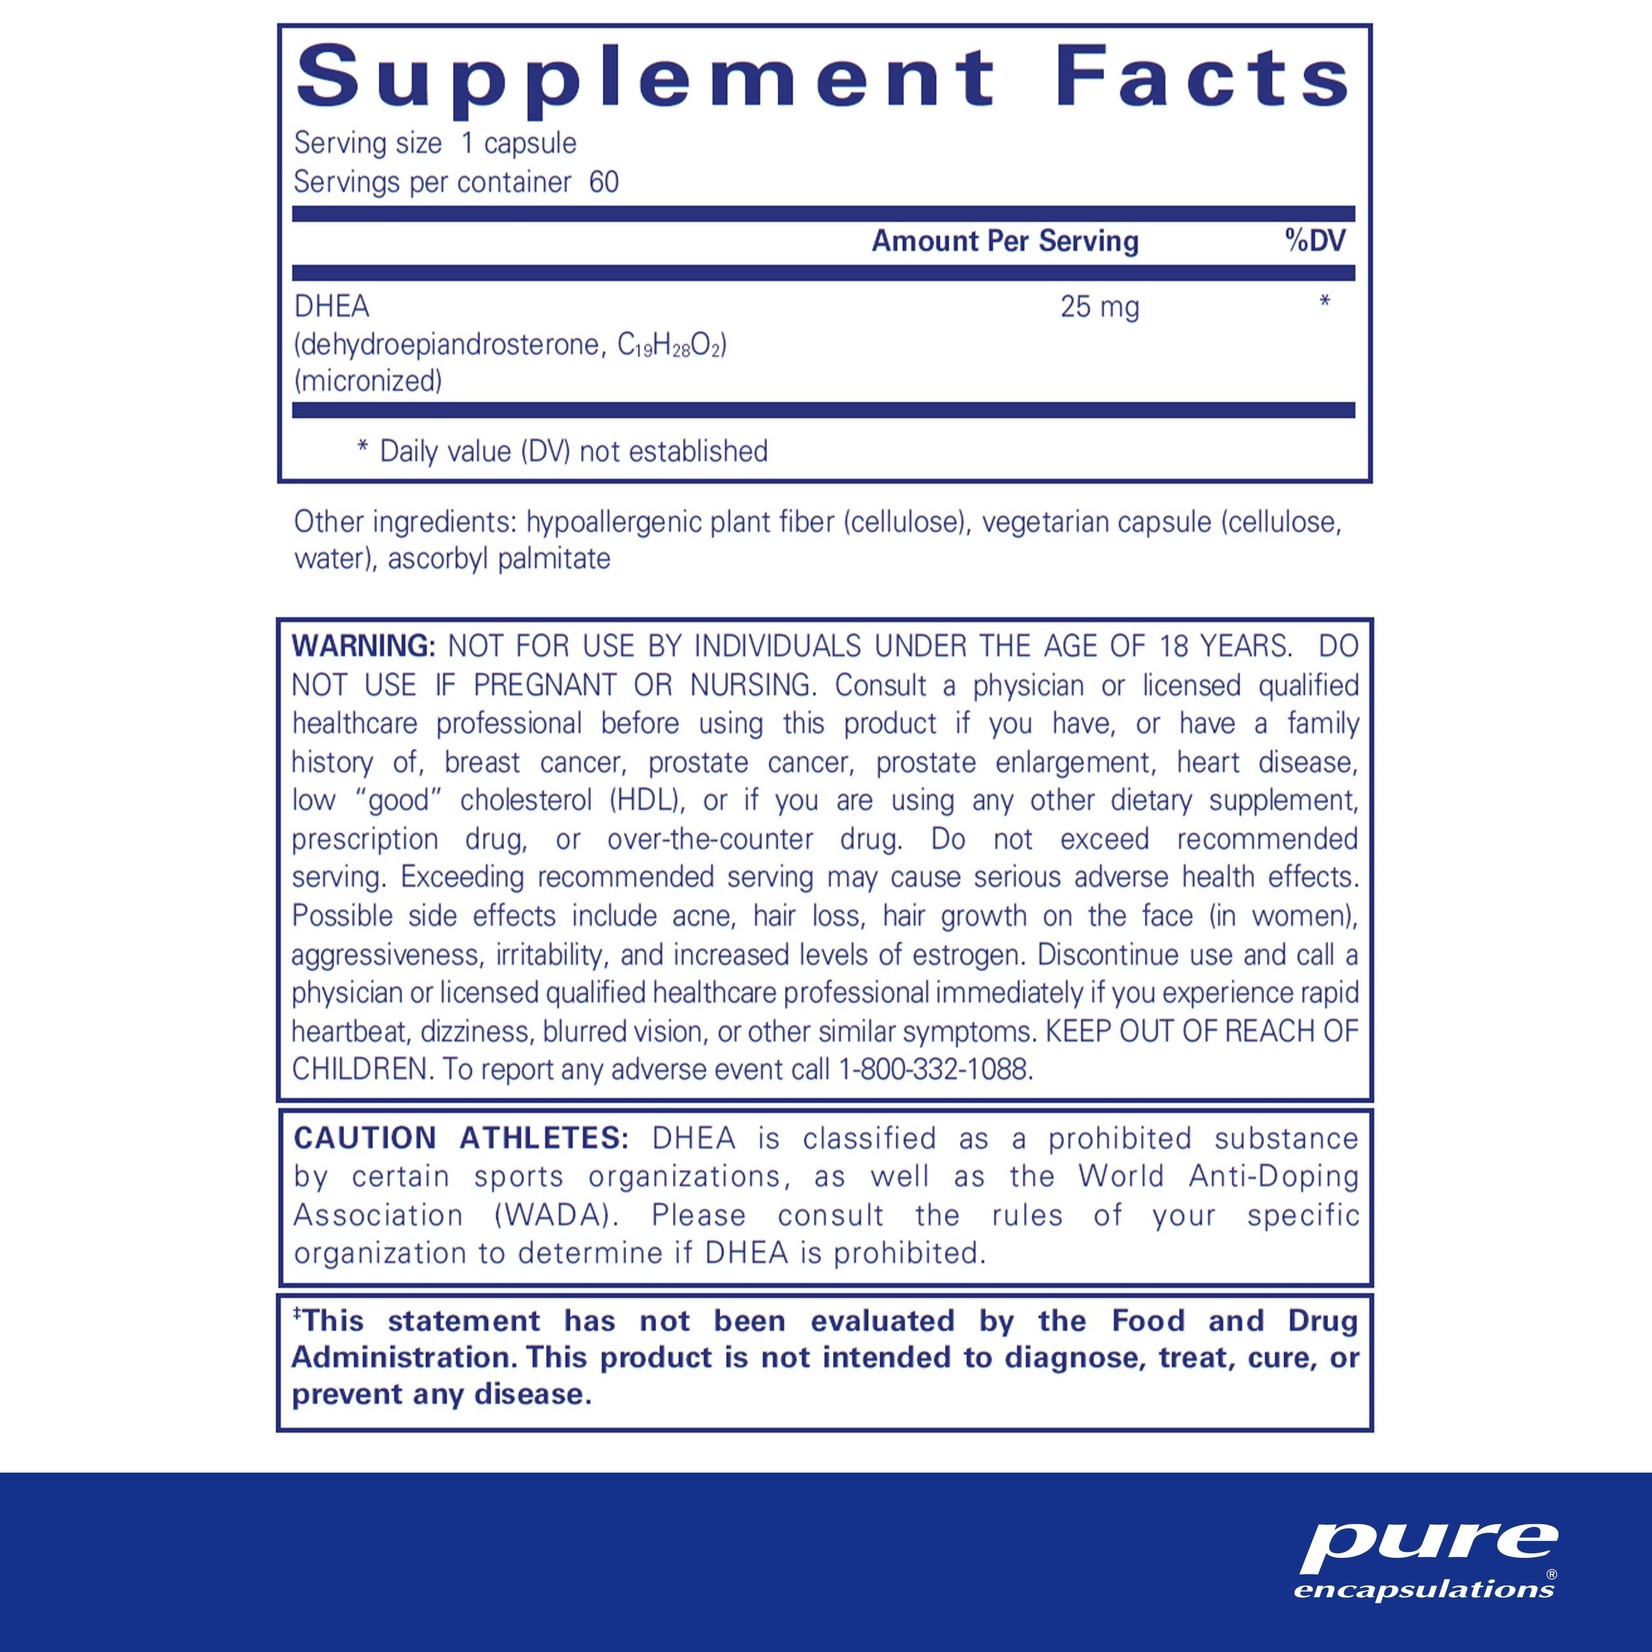 Pure Encapsulations Pure Encapsulations - Dhea 25 mg - 60 Capsules